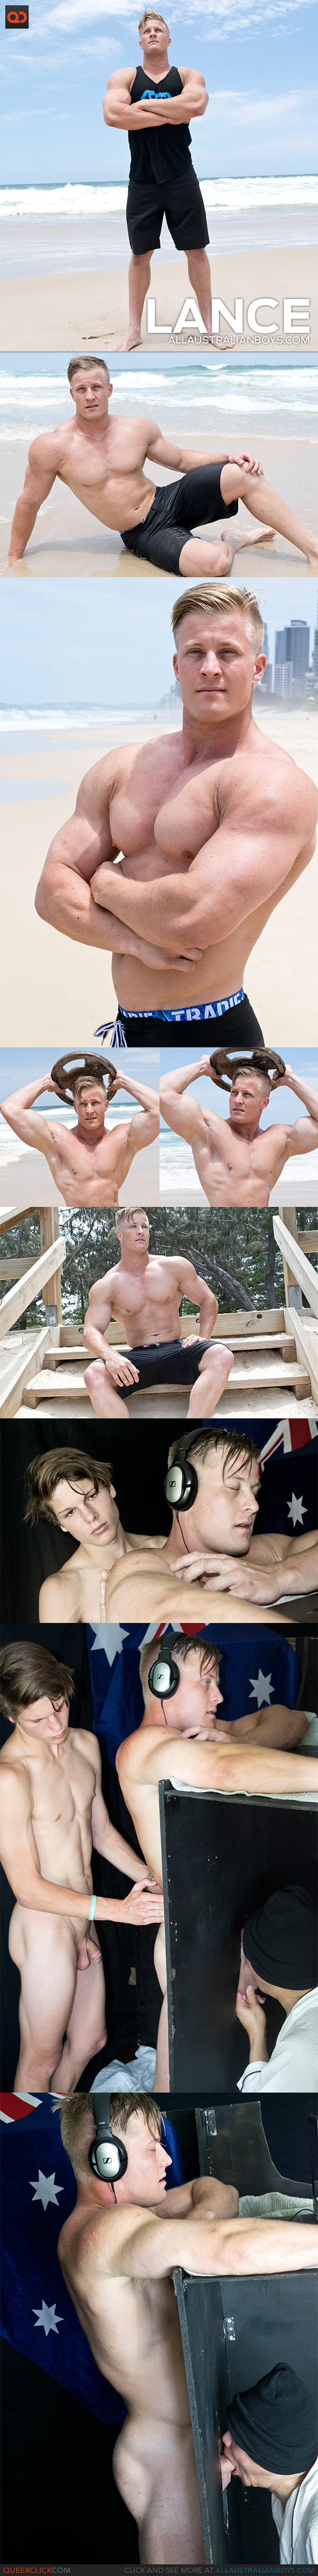 All Australian Boys: Lance